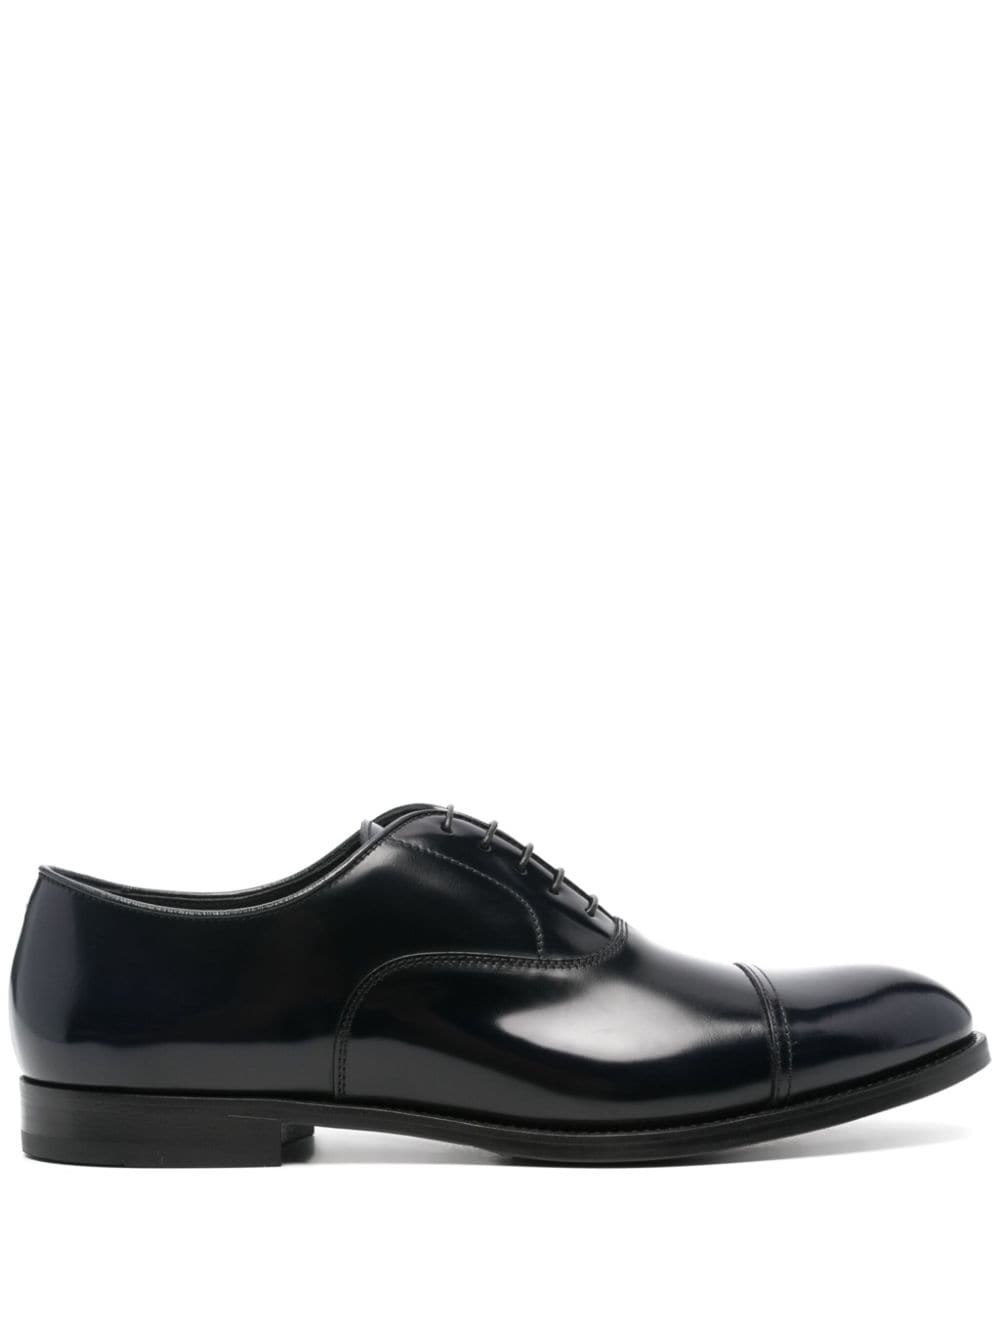 Doucal's leather oxford shoes - Black von Doucal's